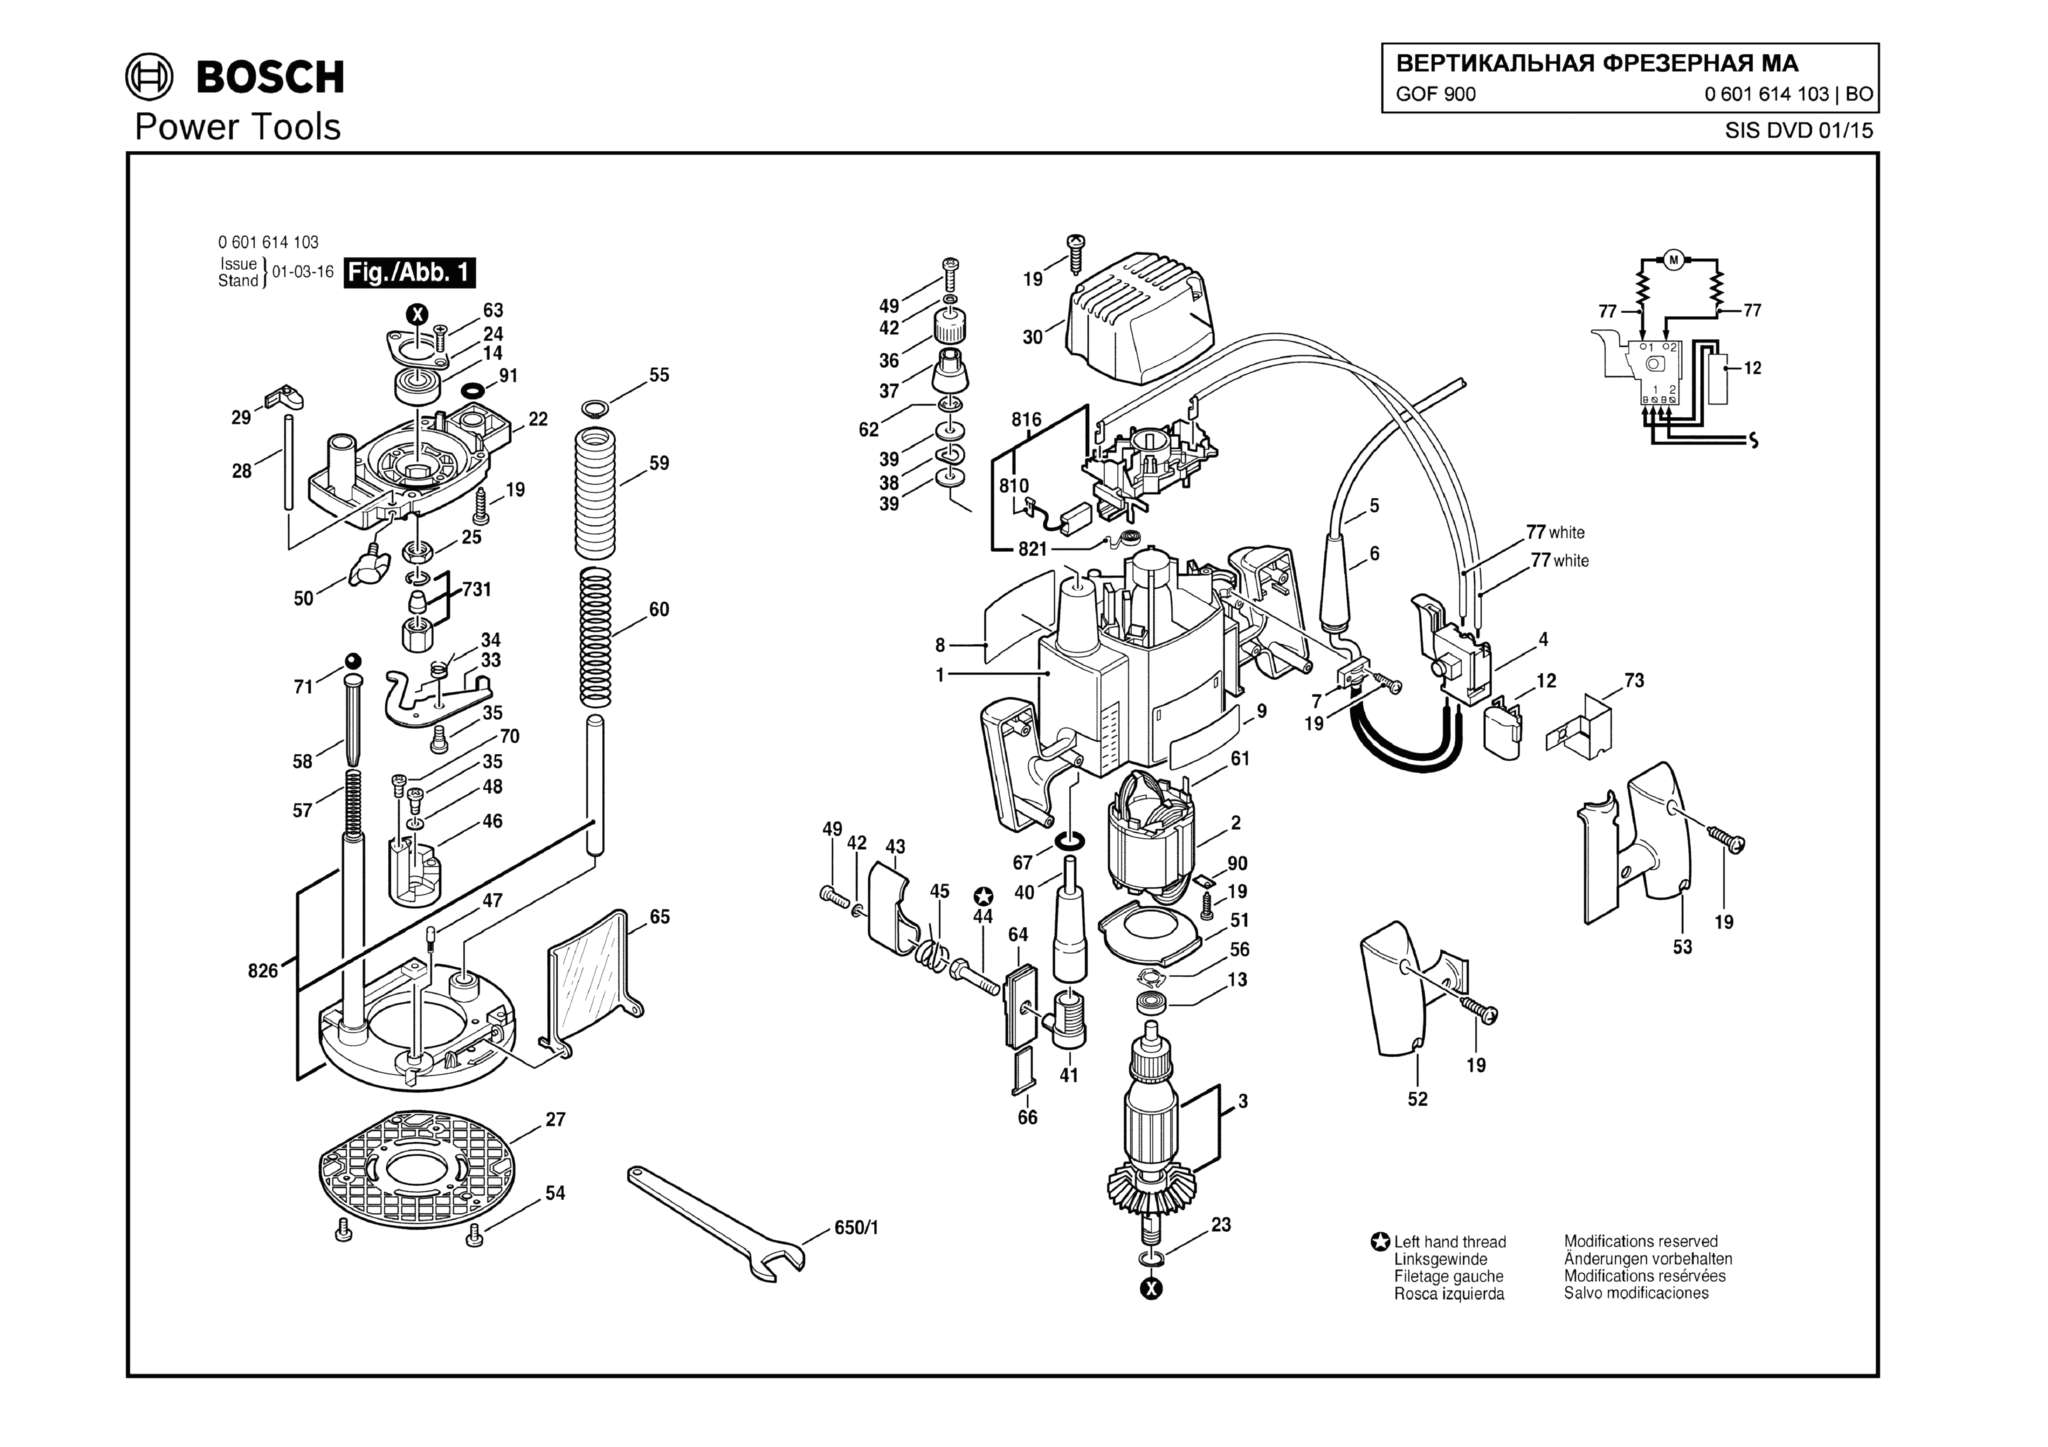 Запчасти, схема и деталировка Bosch GOF 900 (ТИП 0601614103)